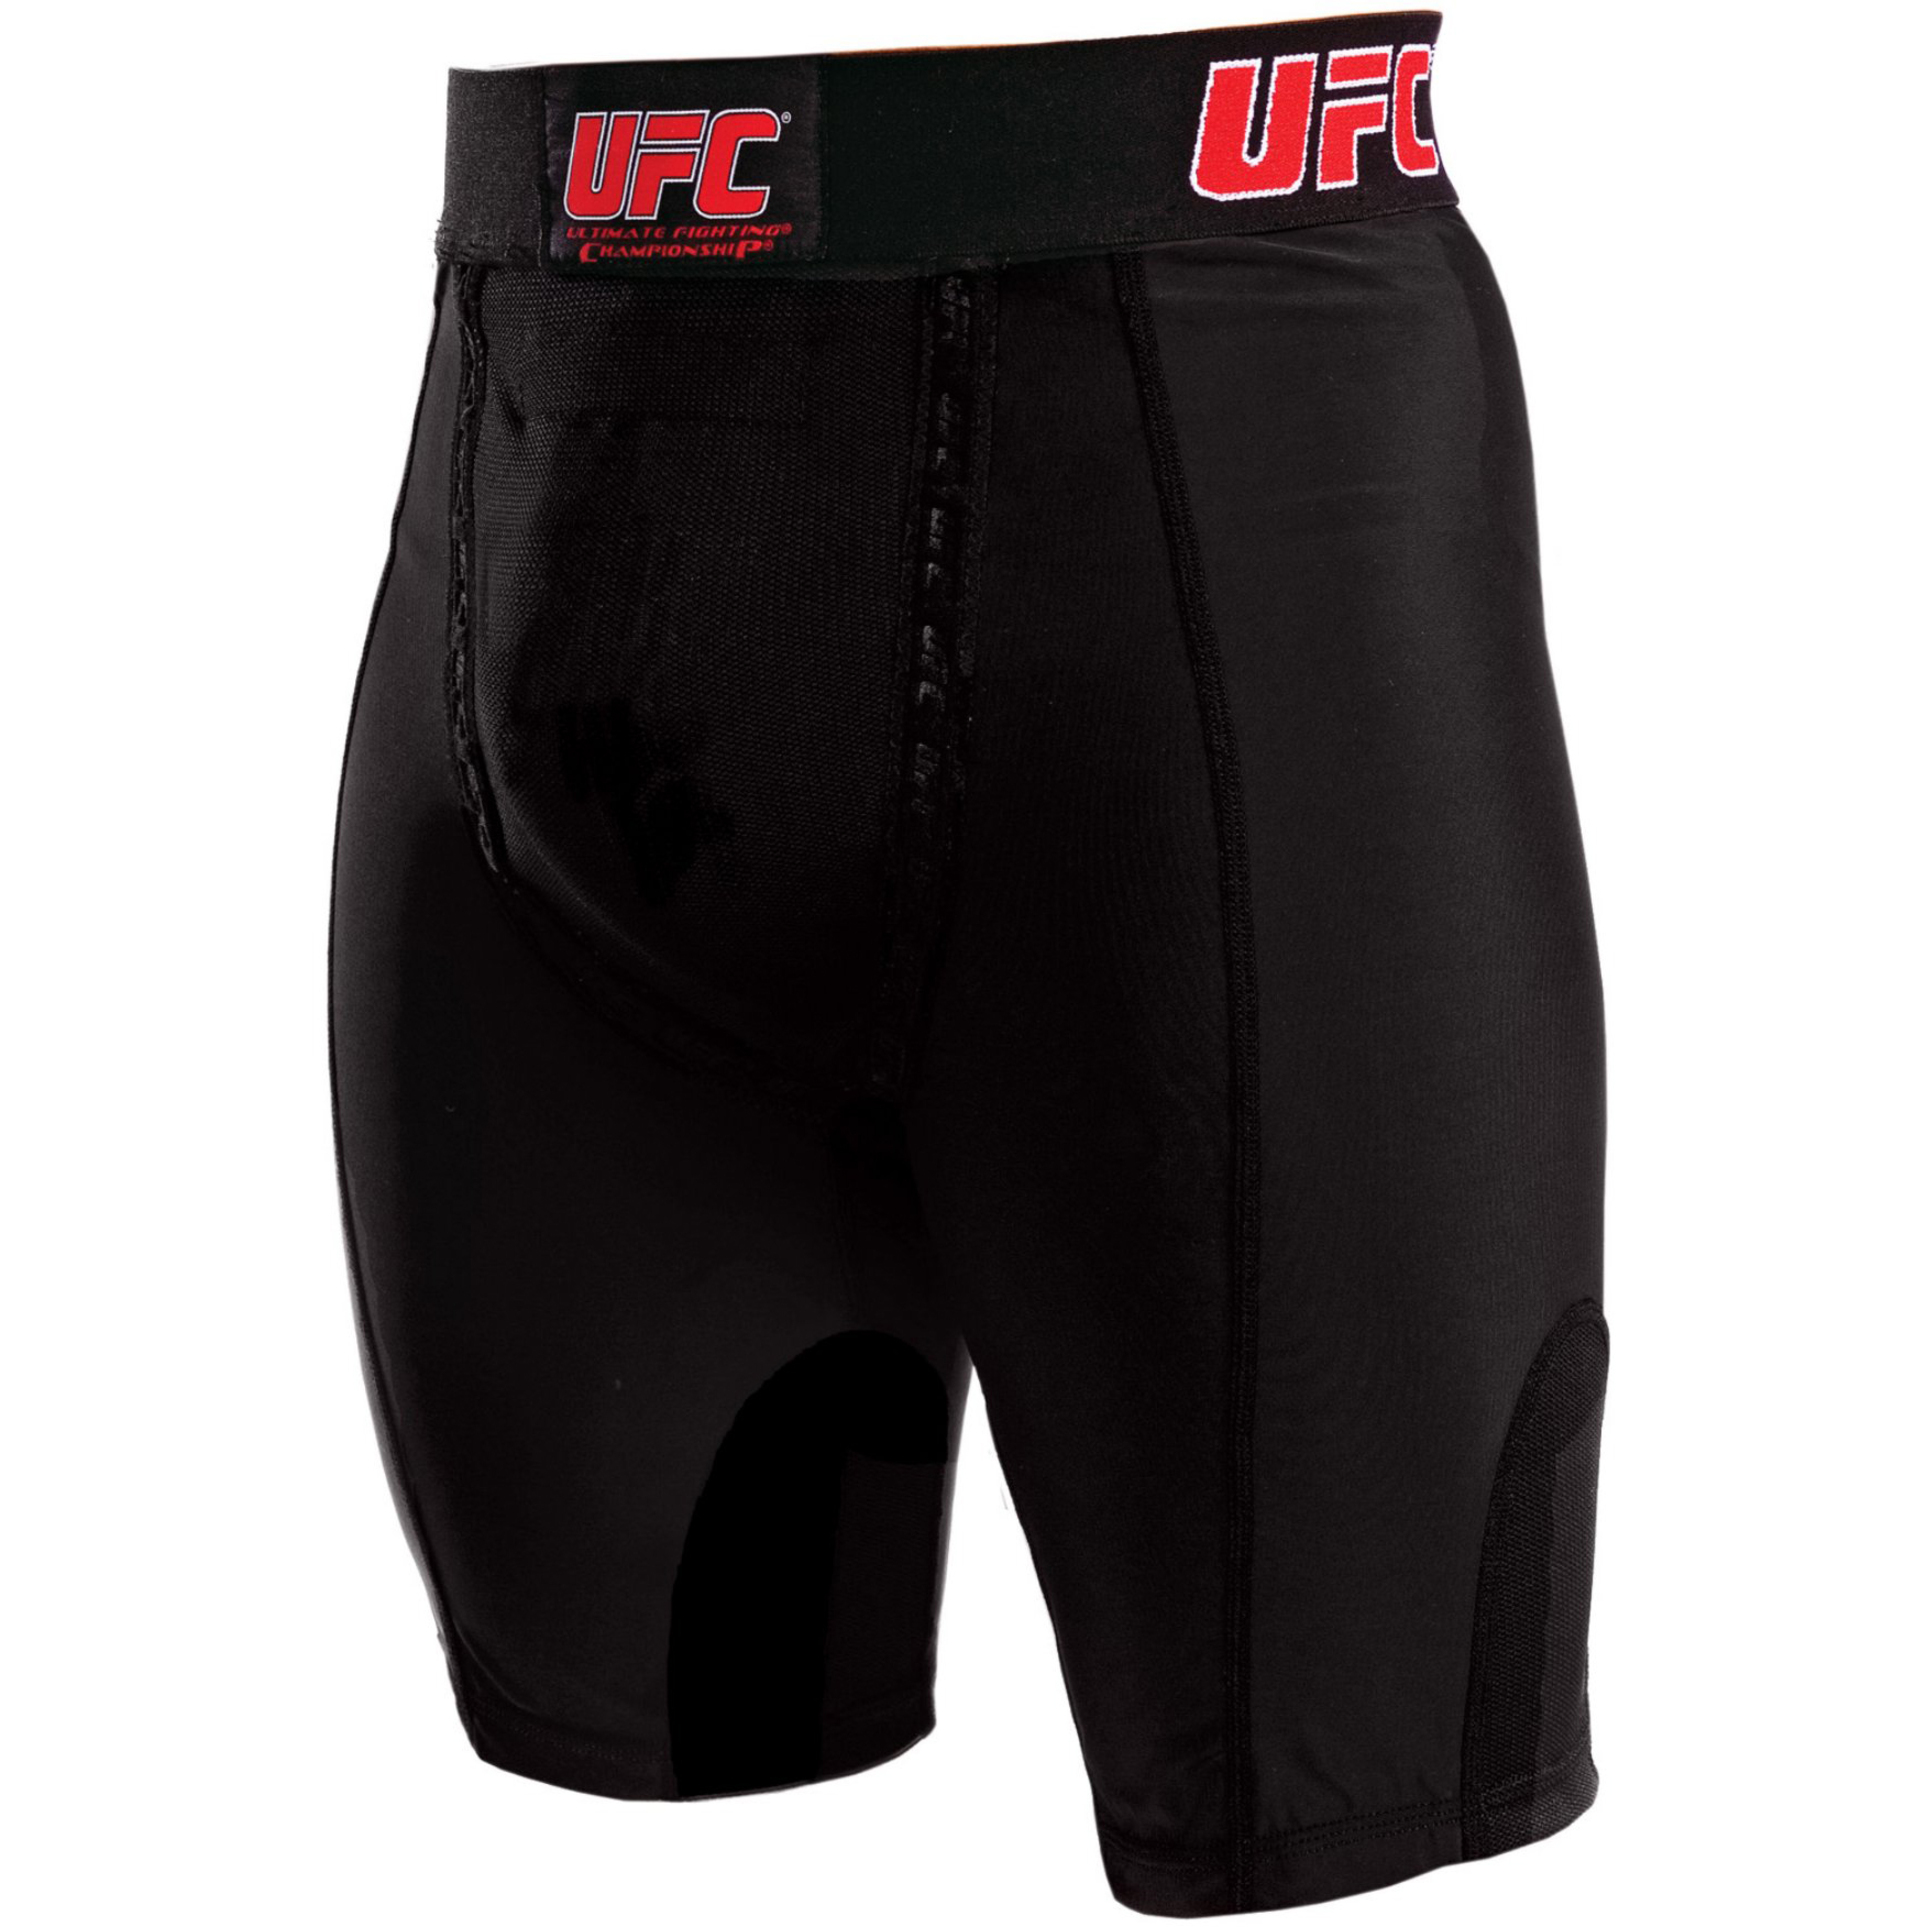 UFC Compression Shorts - image 1 of 1